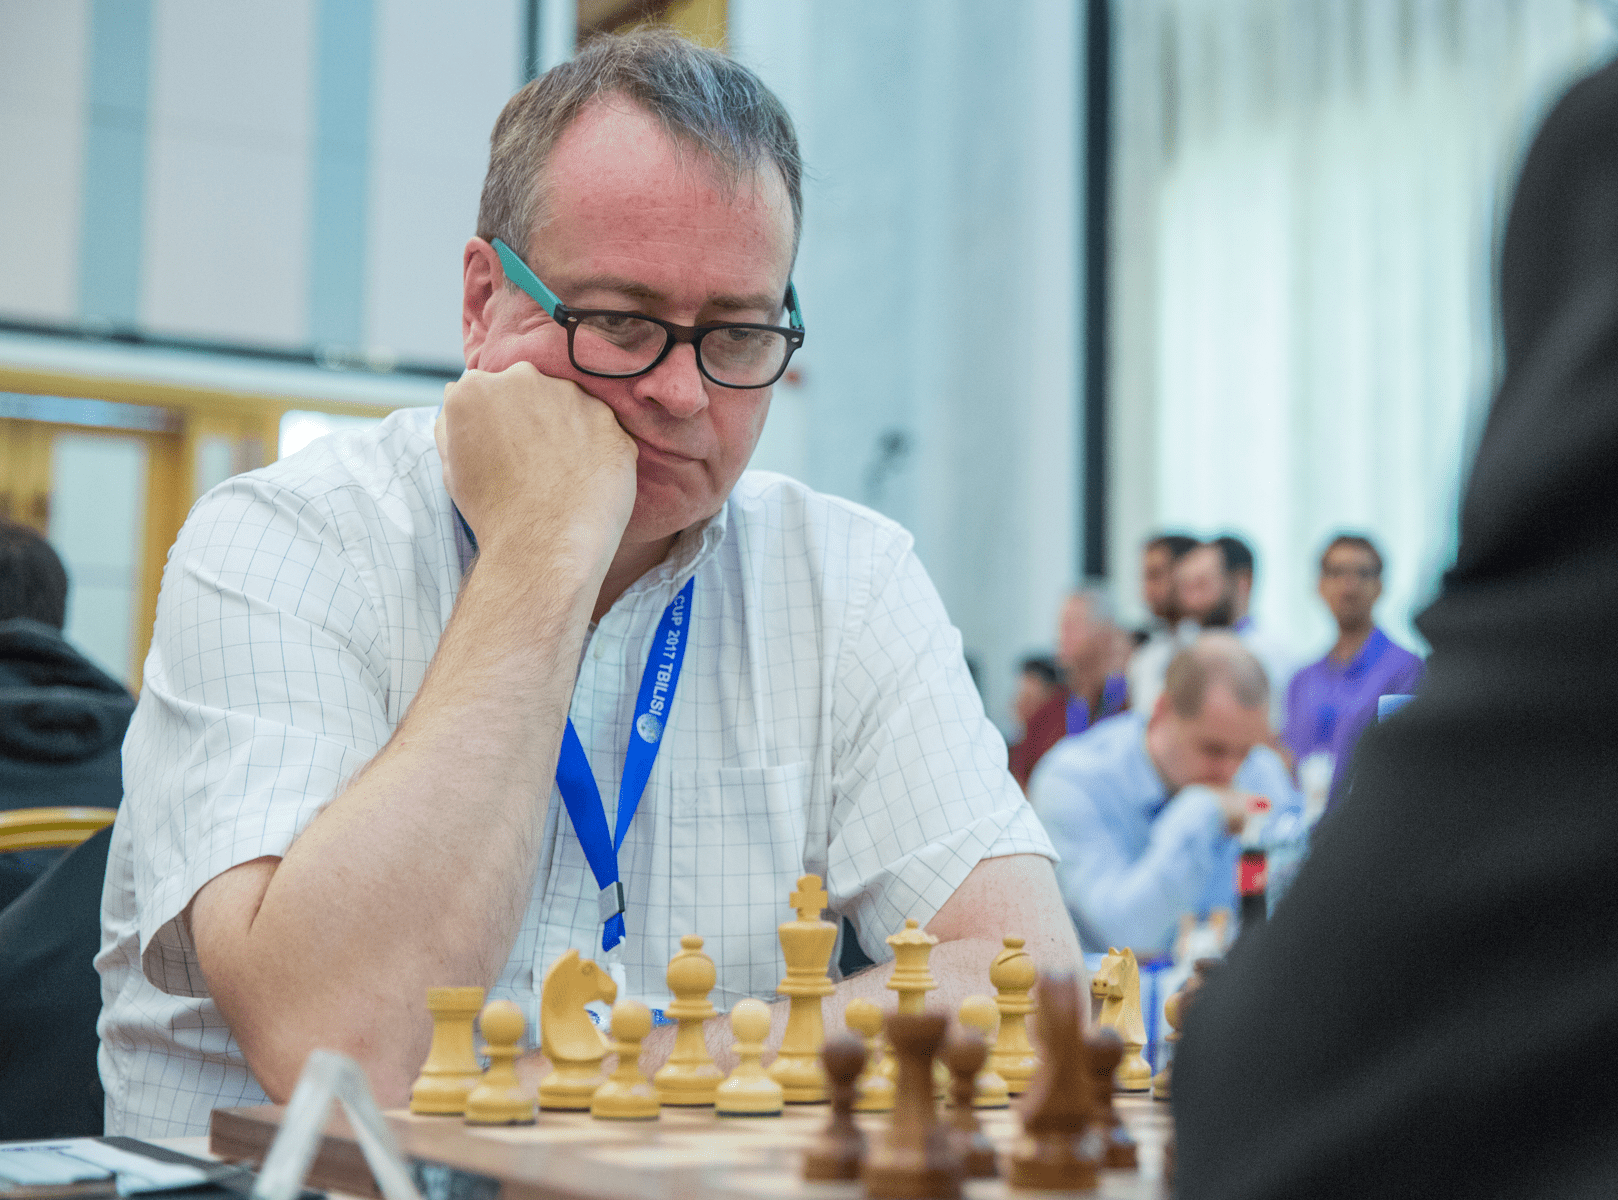 FairPlay Sports on X: @DGukesh just won the Menorca Chess Open